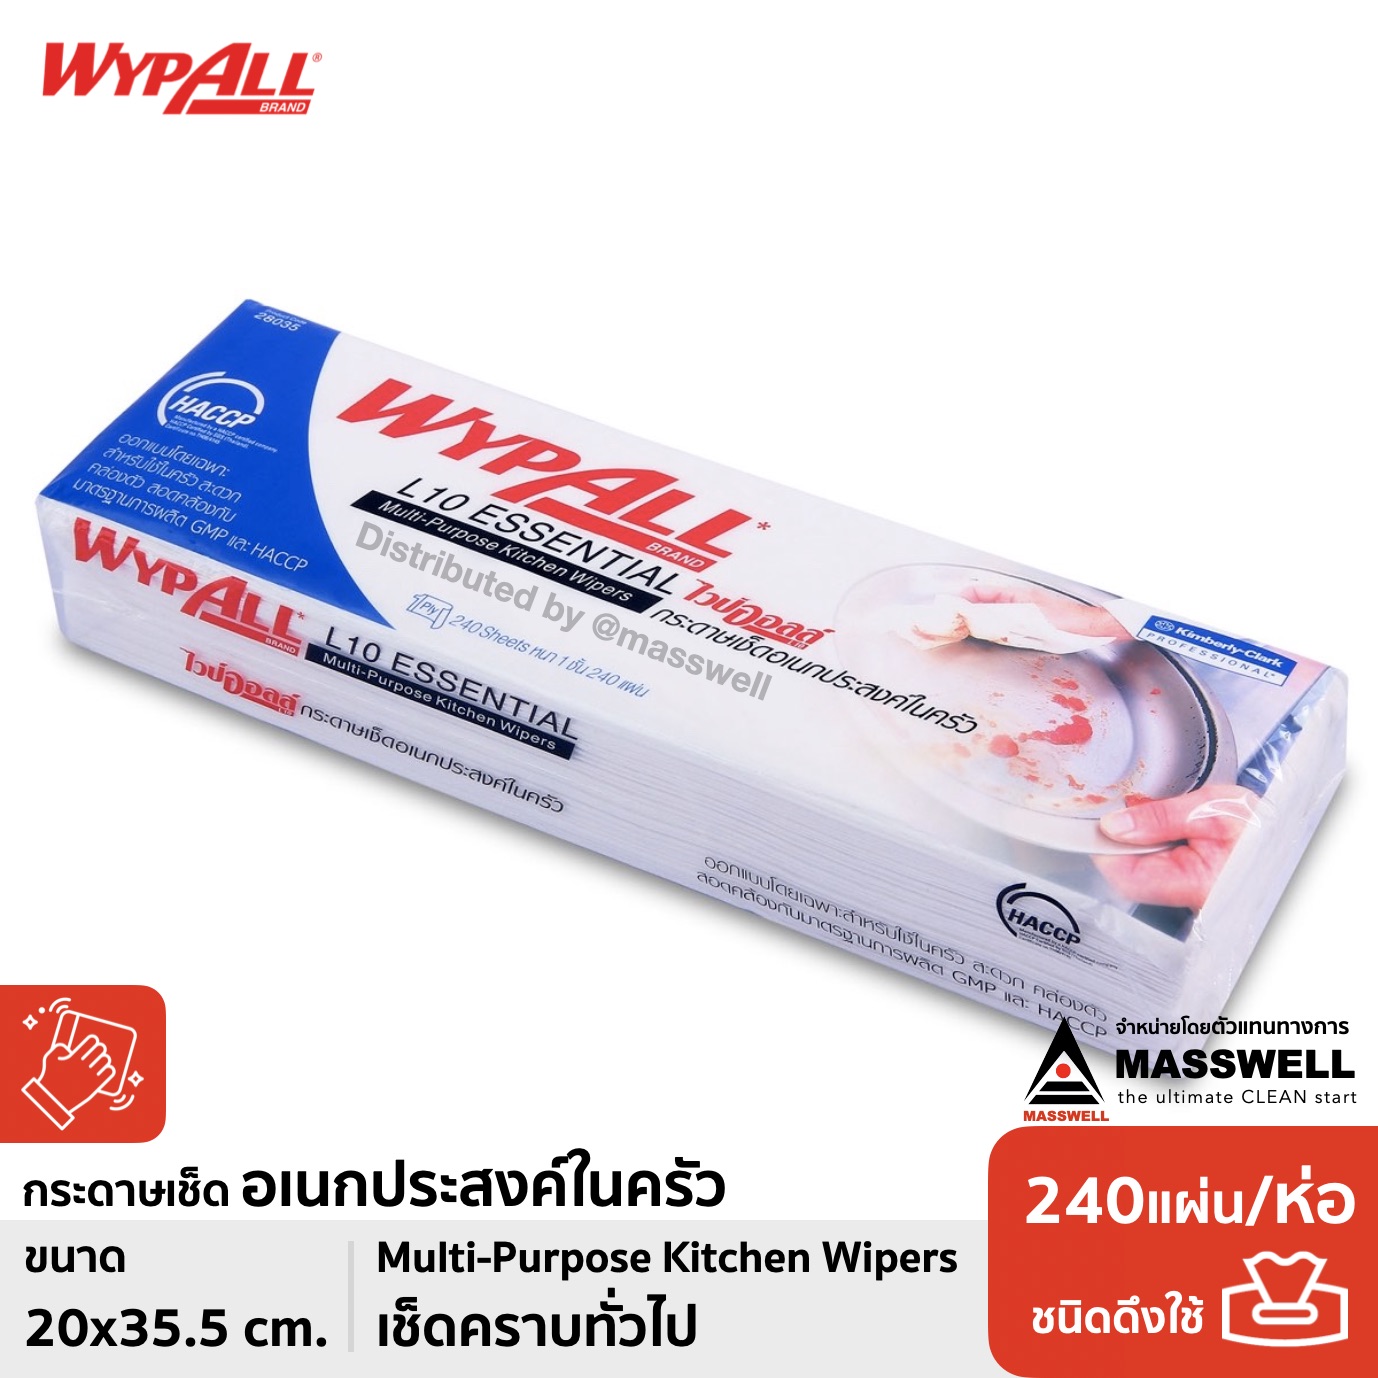 WYPALL กระดาษเช็ดอเนกประสงค์ L10 Essential (240แผ่น) [28035]